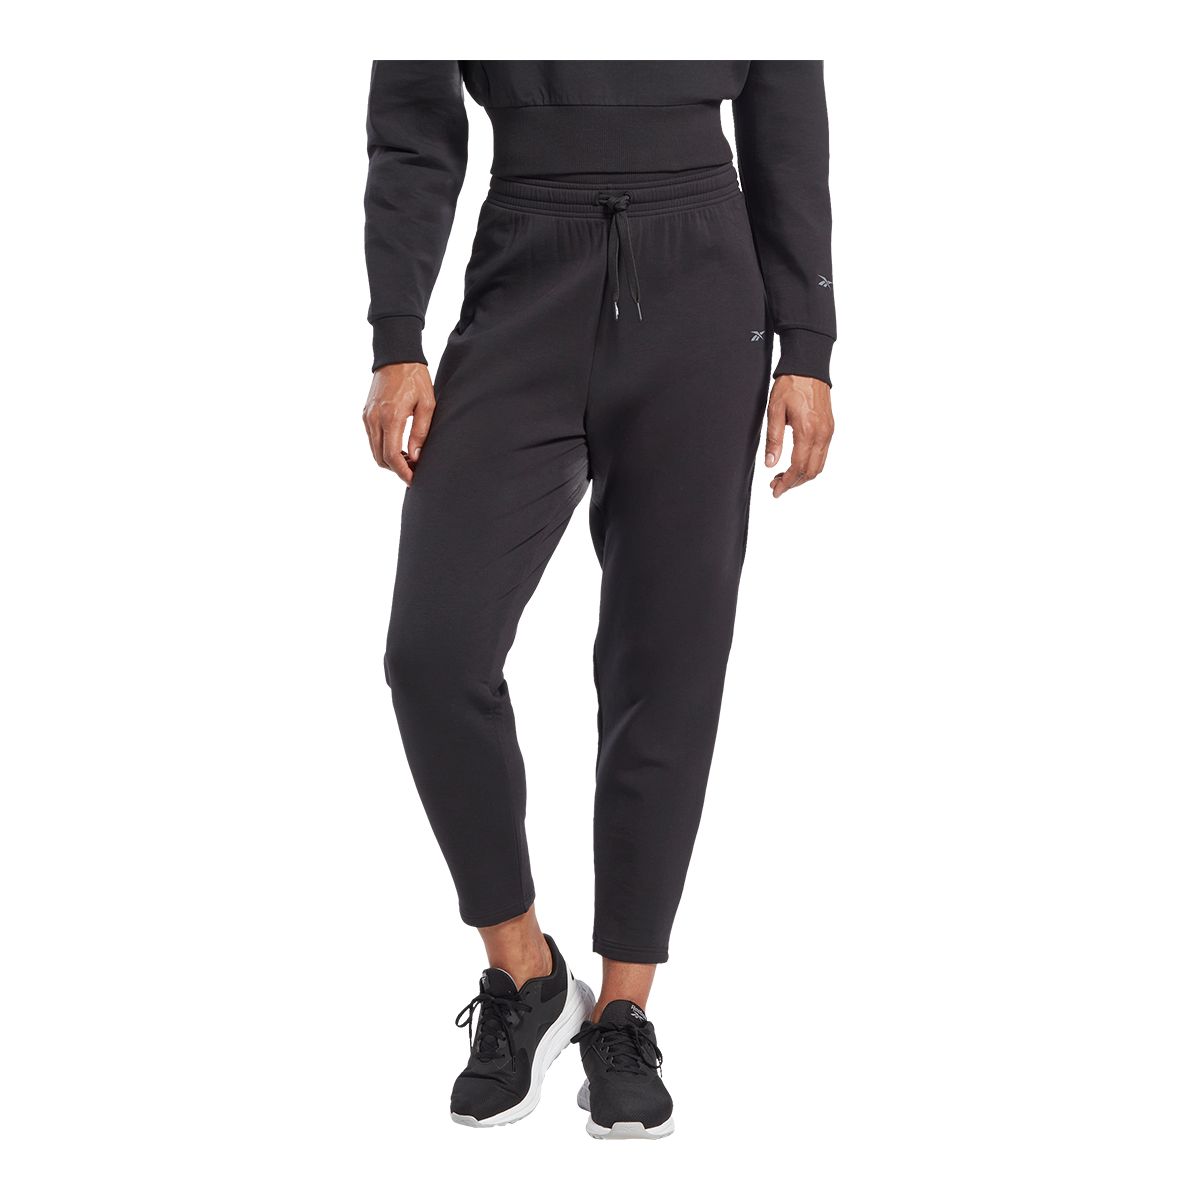 DreamBlend Cotton Knit Pants in BLACK | Reebok Online Shop Germany